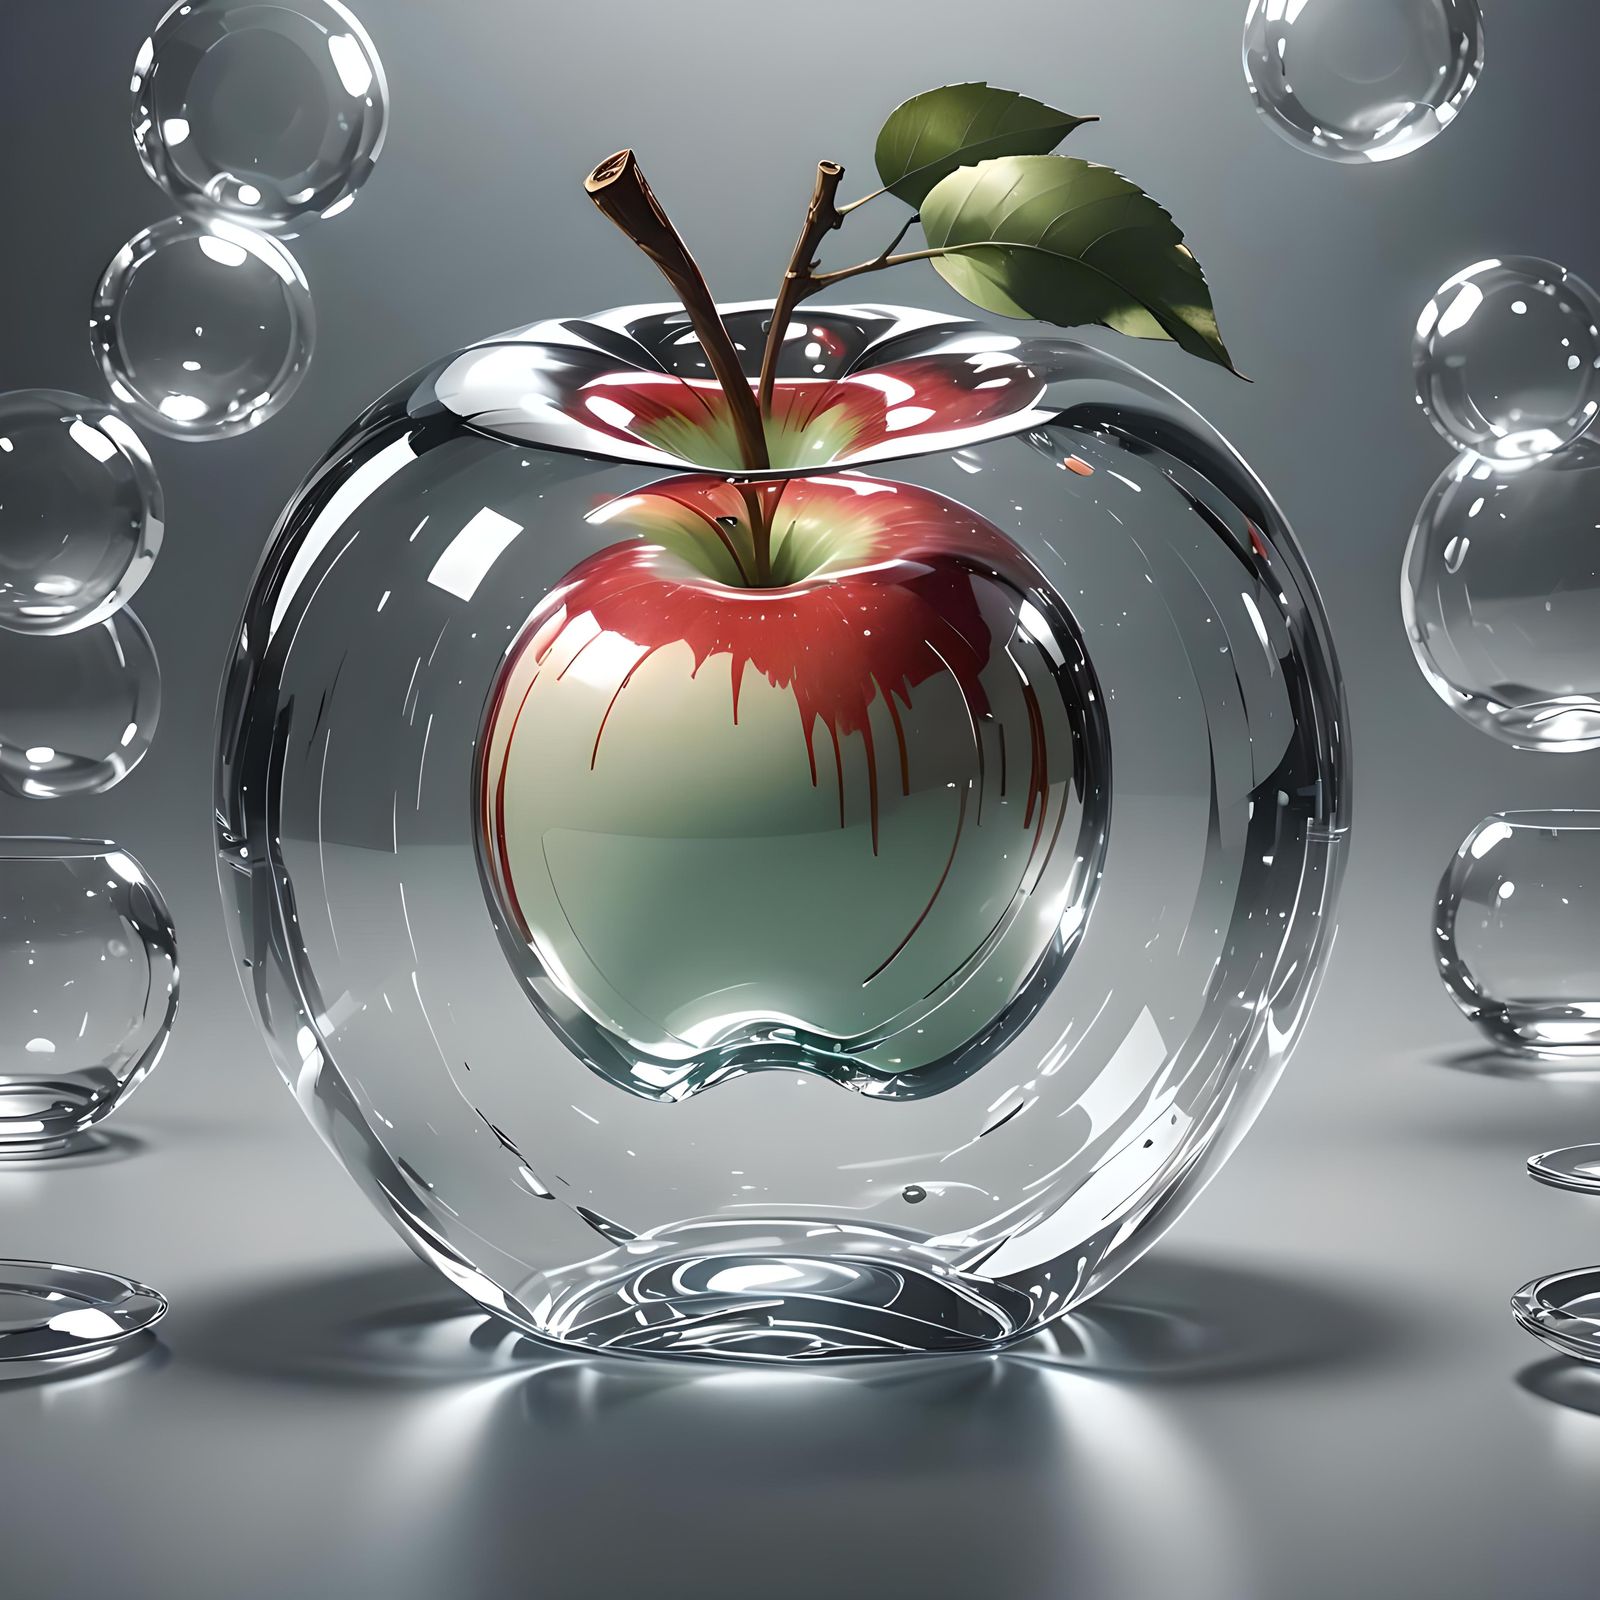 An apple inside a dreamy apple